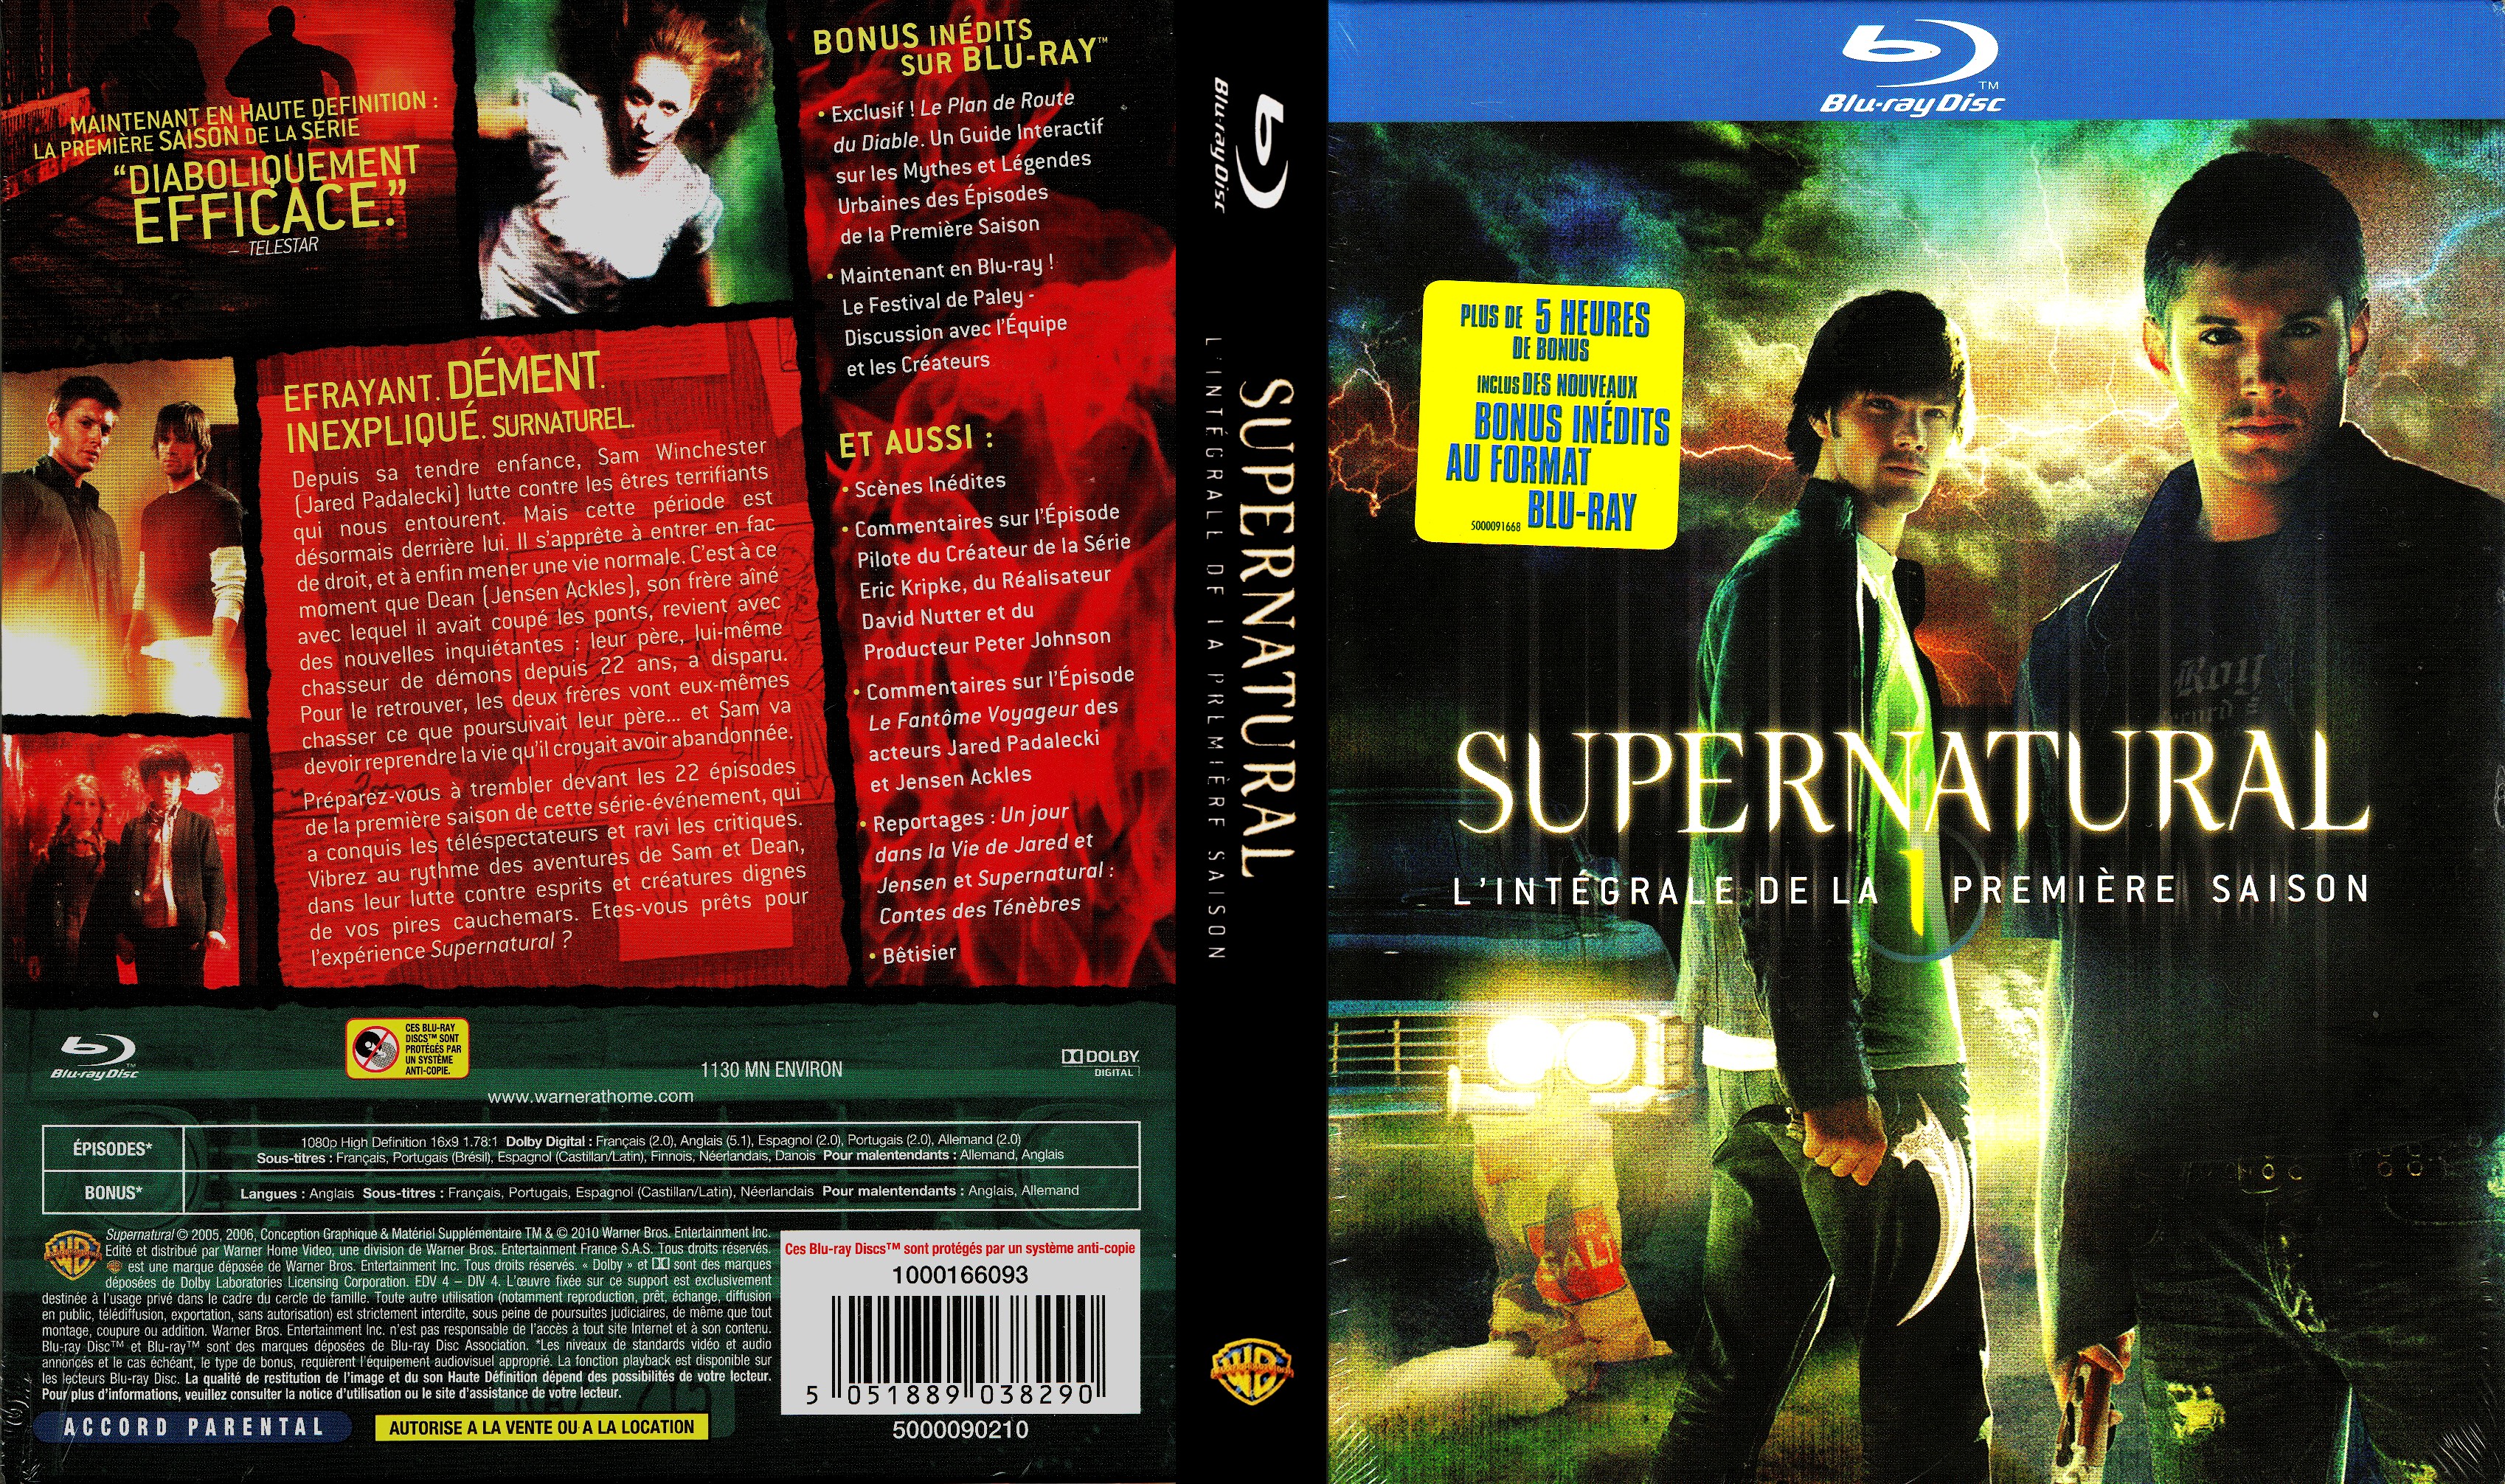 Jaquette DVD Supernatural saison 1 COFFRET (BLU-RAY) v2